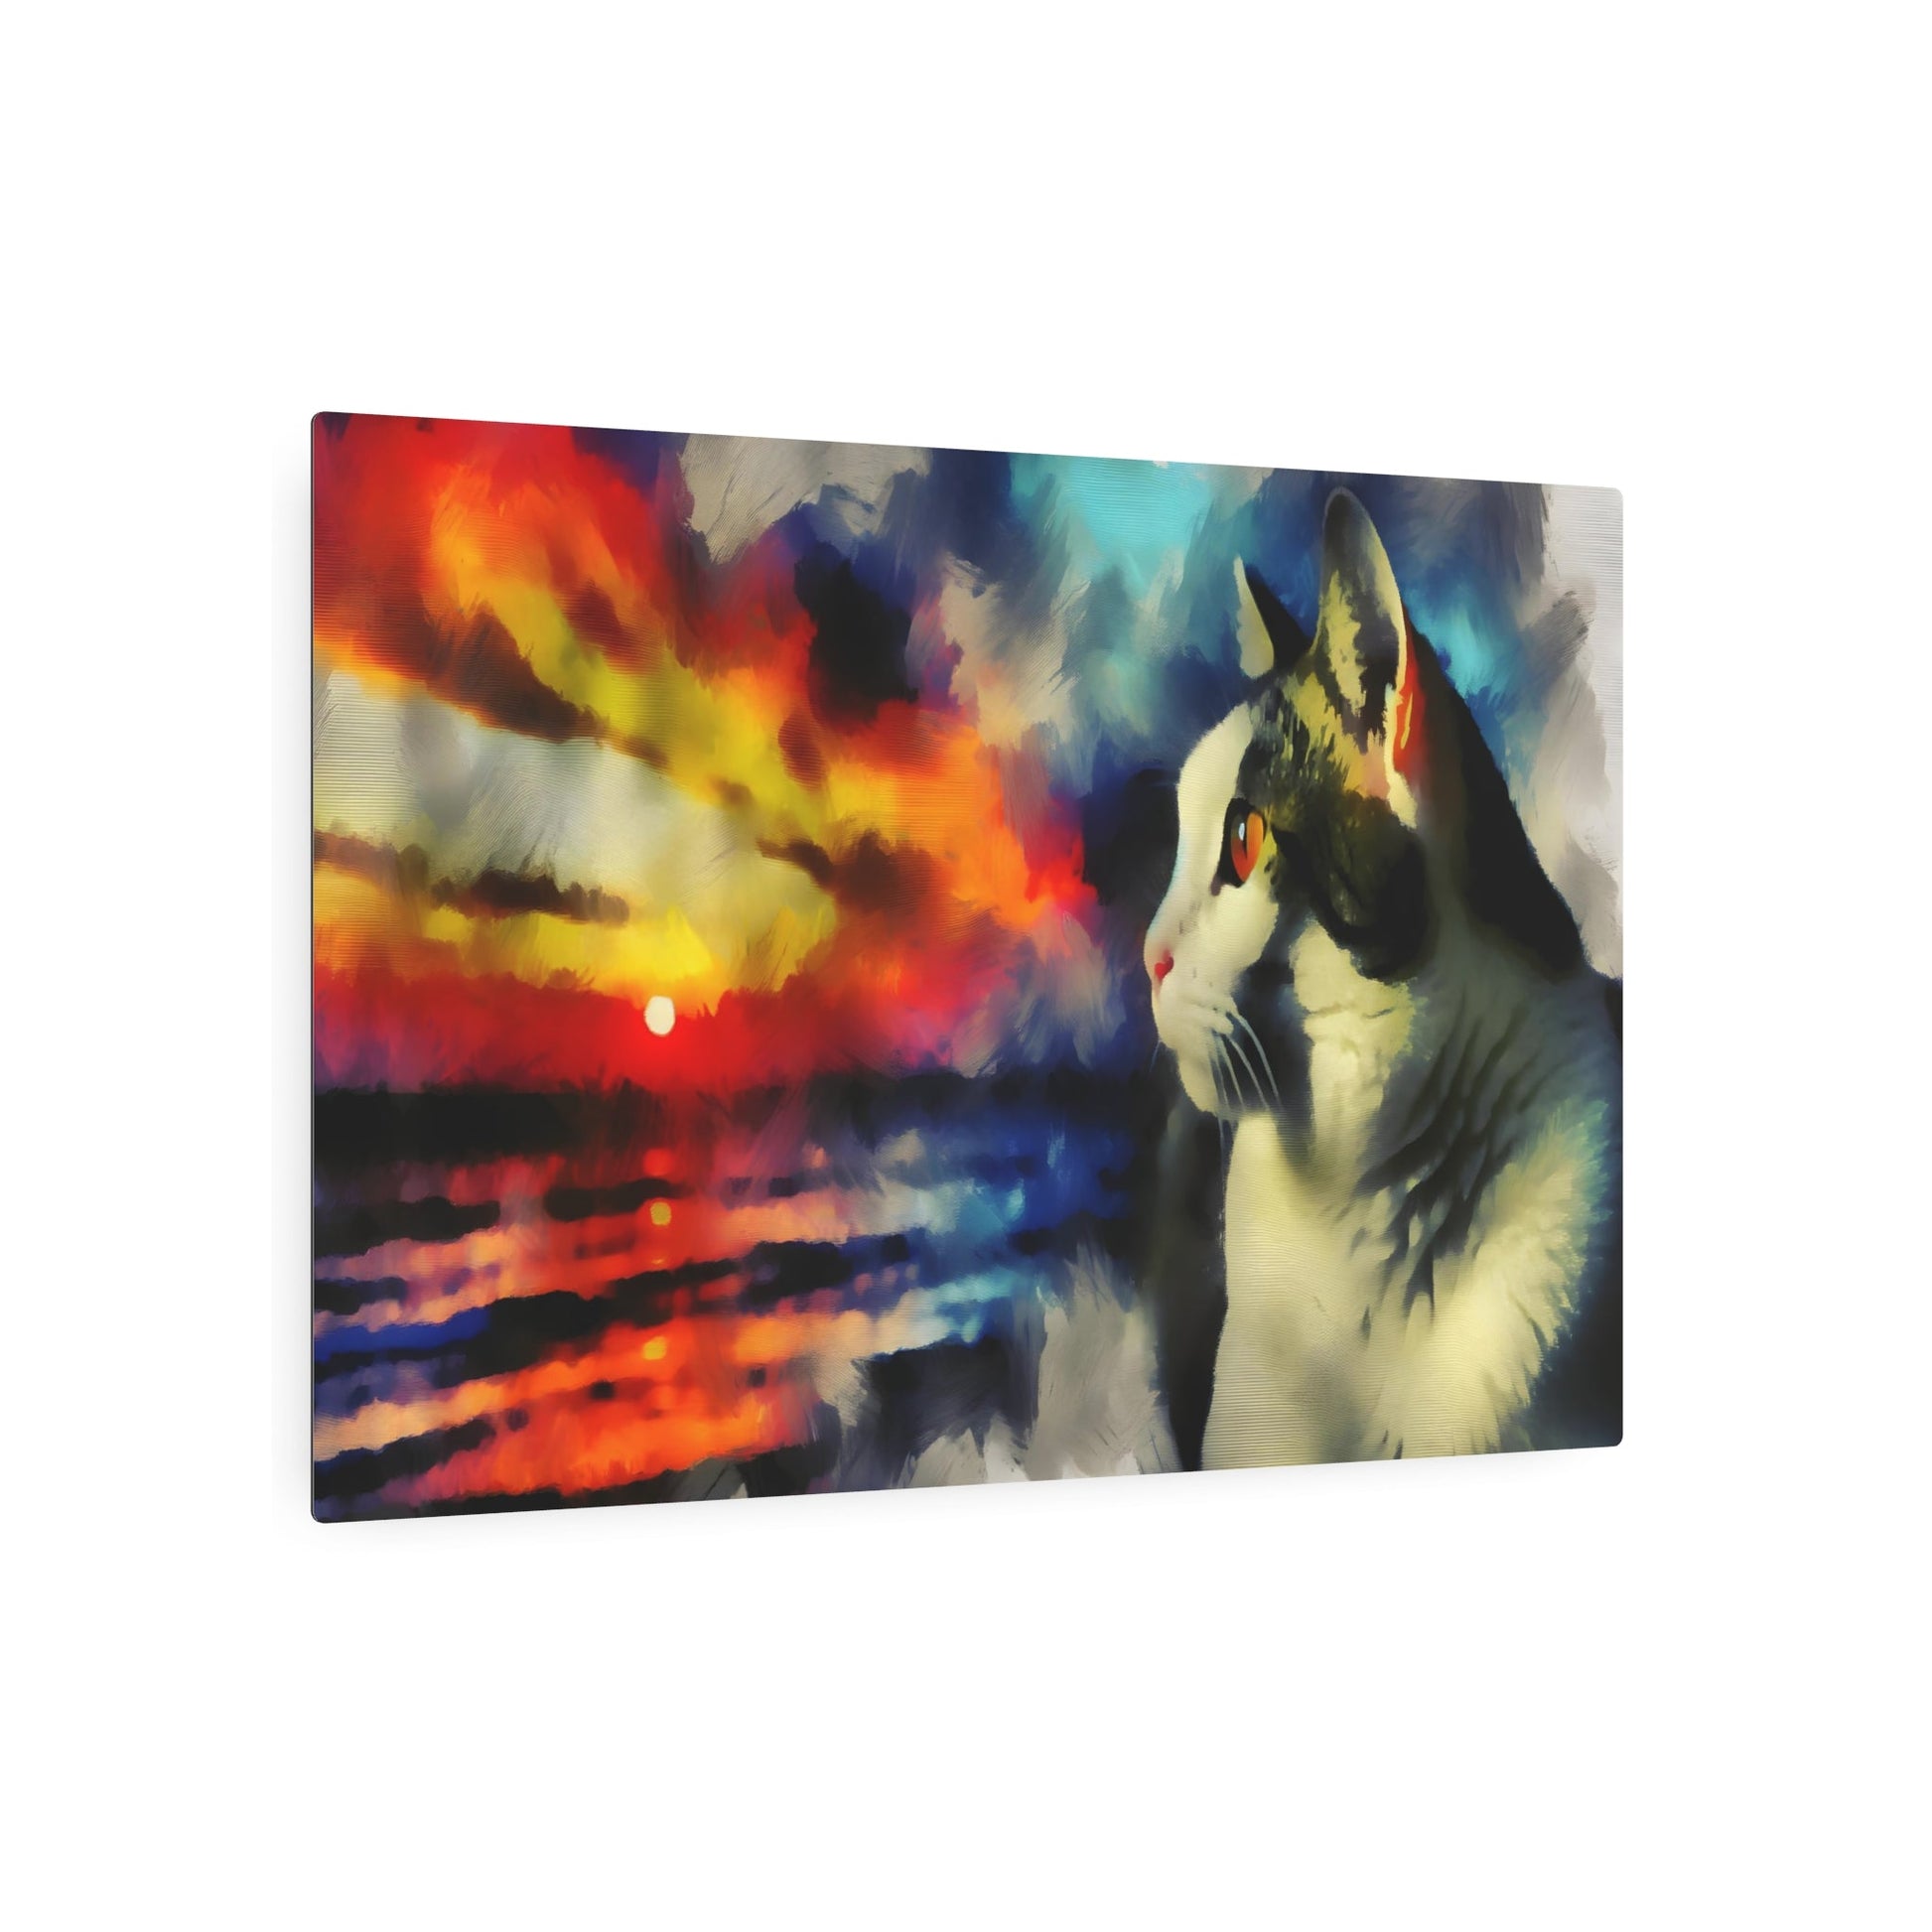 Metal Poster Art | "Romanticism Western Art Style - Contemplative Cat Gazing at Vibrant Sunset | Unique Handcrafted Romantic Artwork" - Metal Poster Art 36″ x 24″ (Horizontal) 0.12''